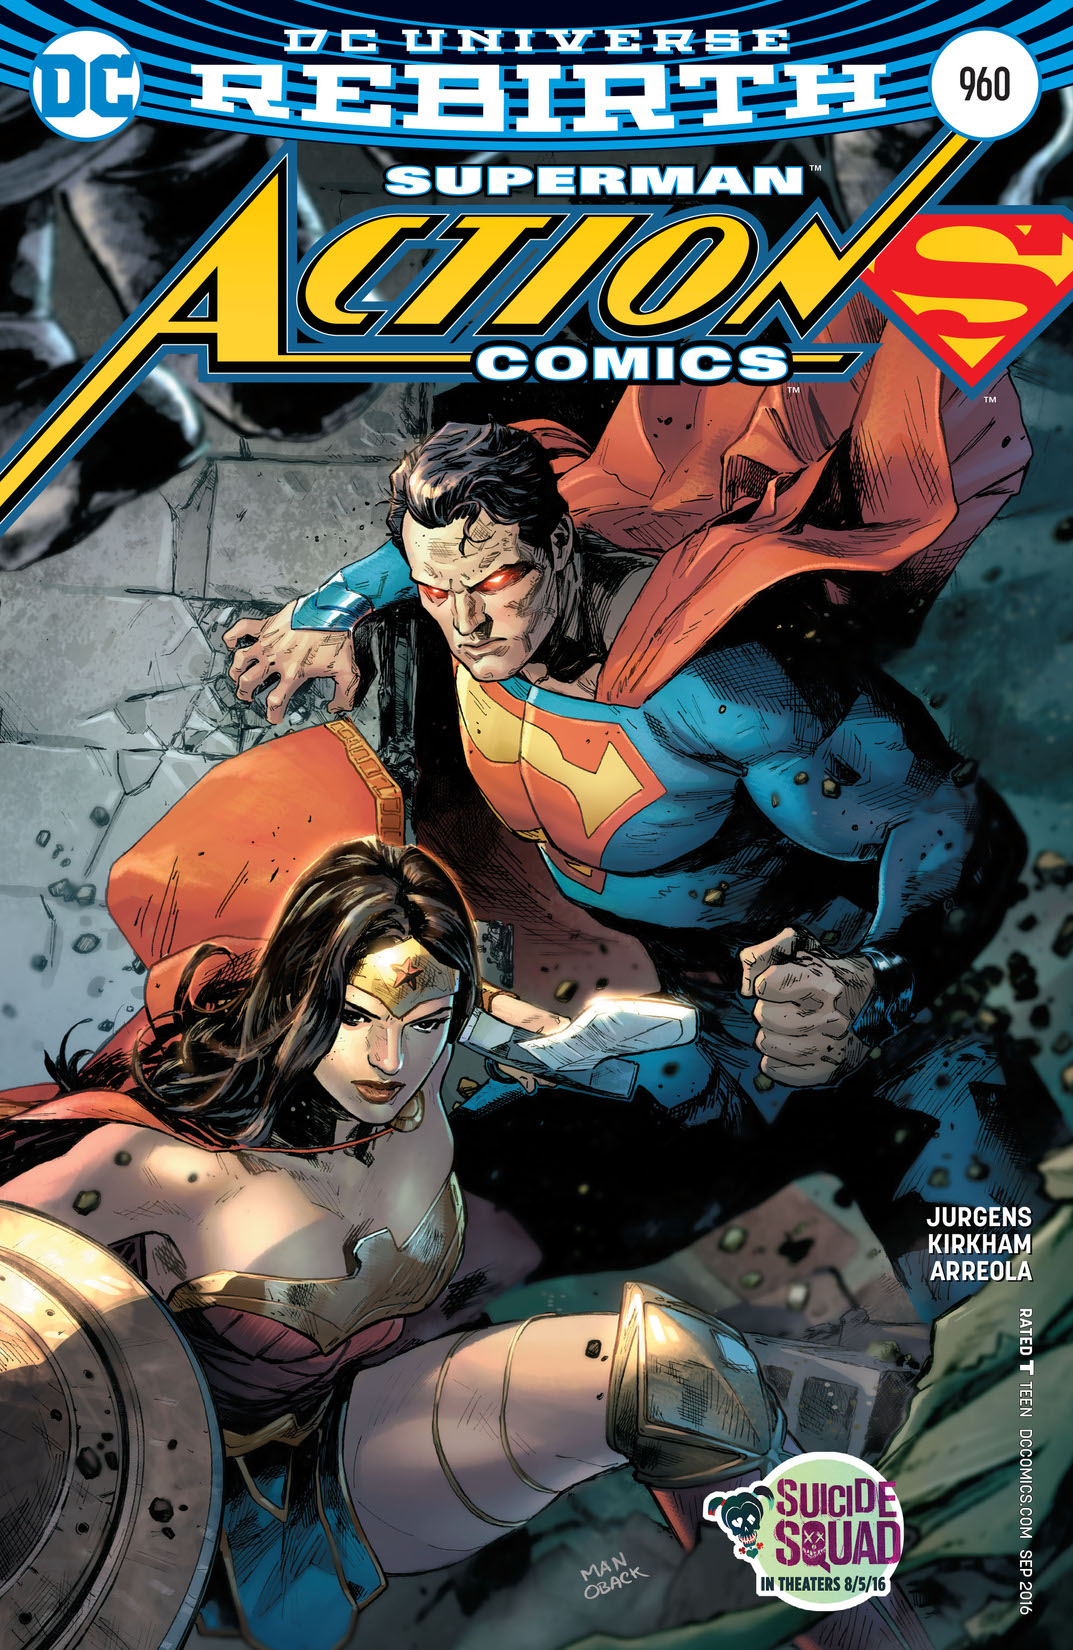 Action Comics (2016-) #960 preview images